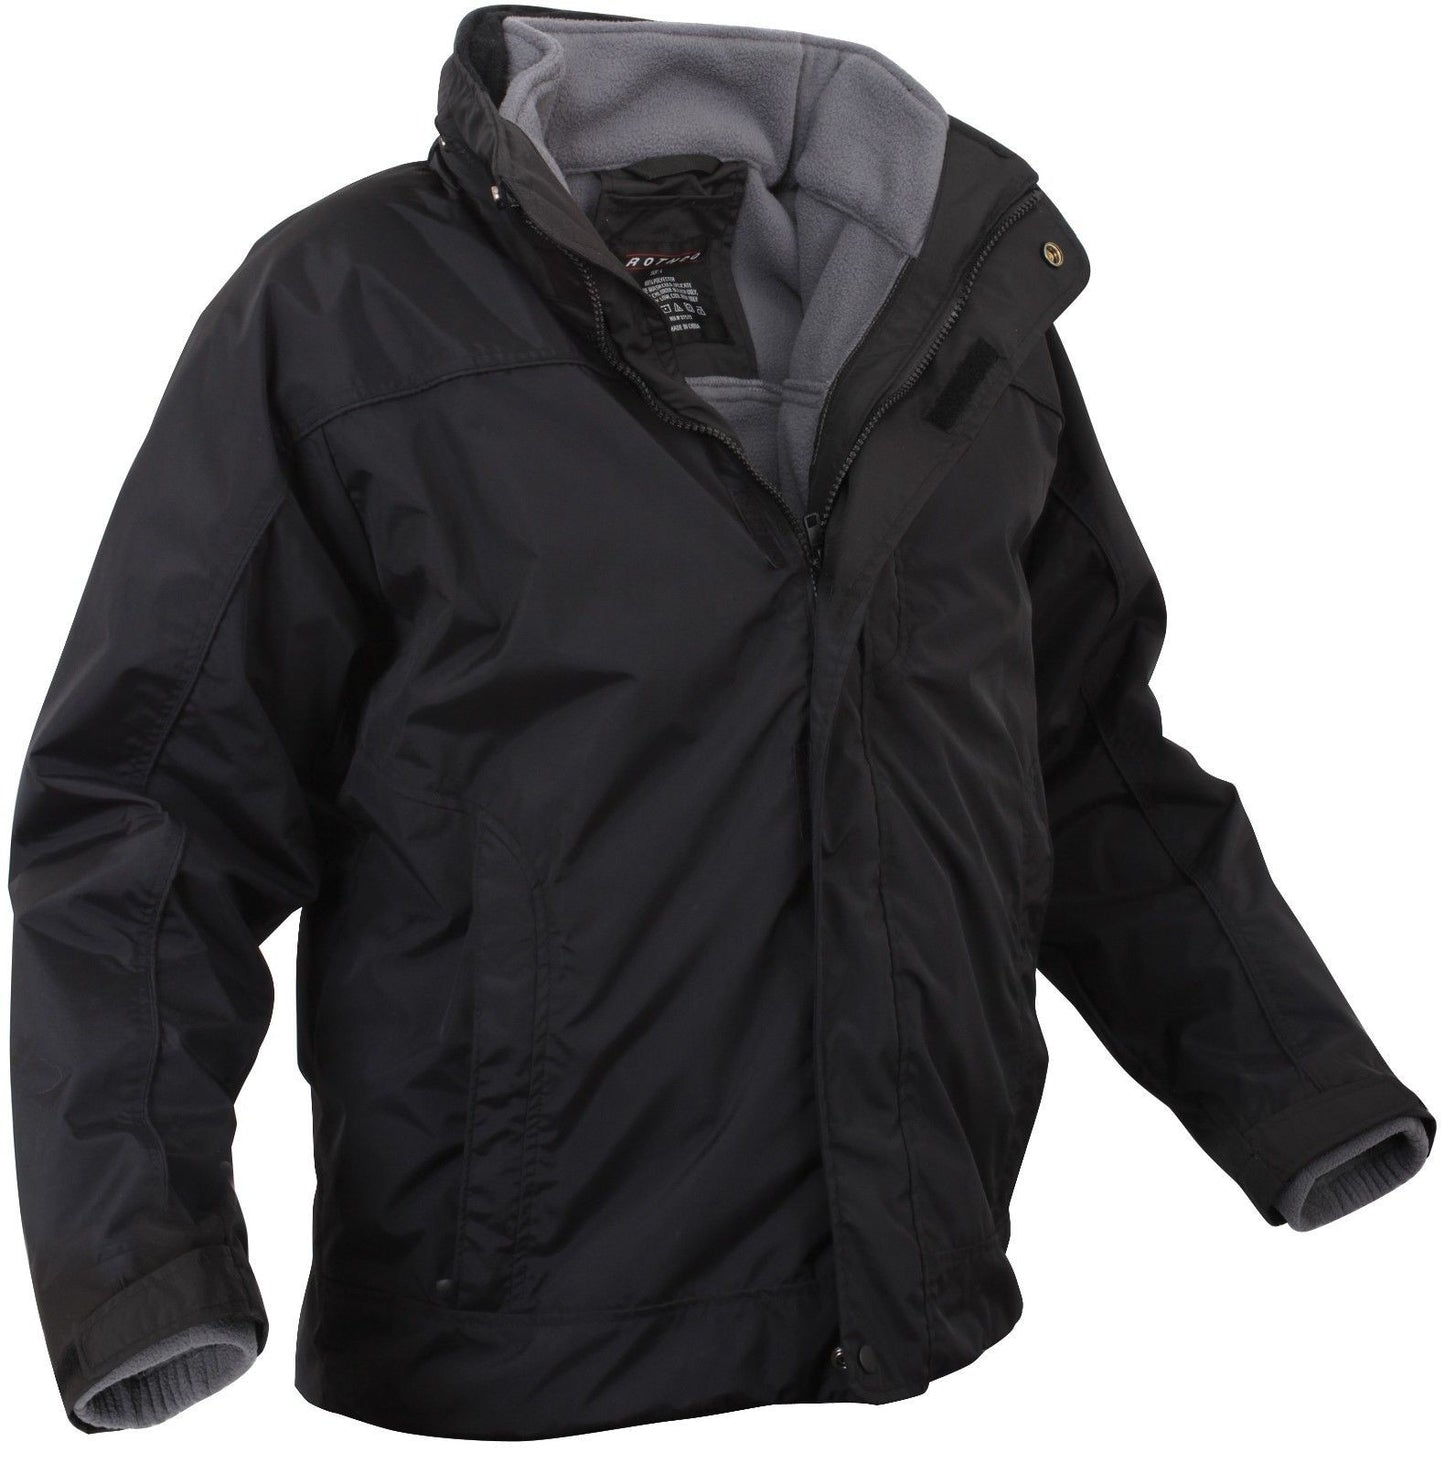 Black All Weather 3-In-1 Waterproof Jacket w/ Detachable Fleece Liner